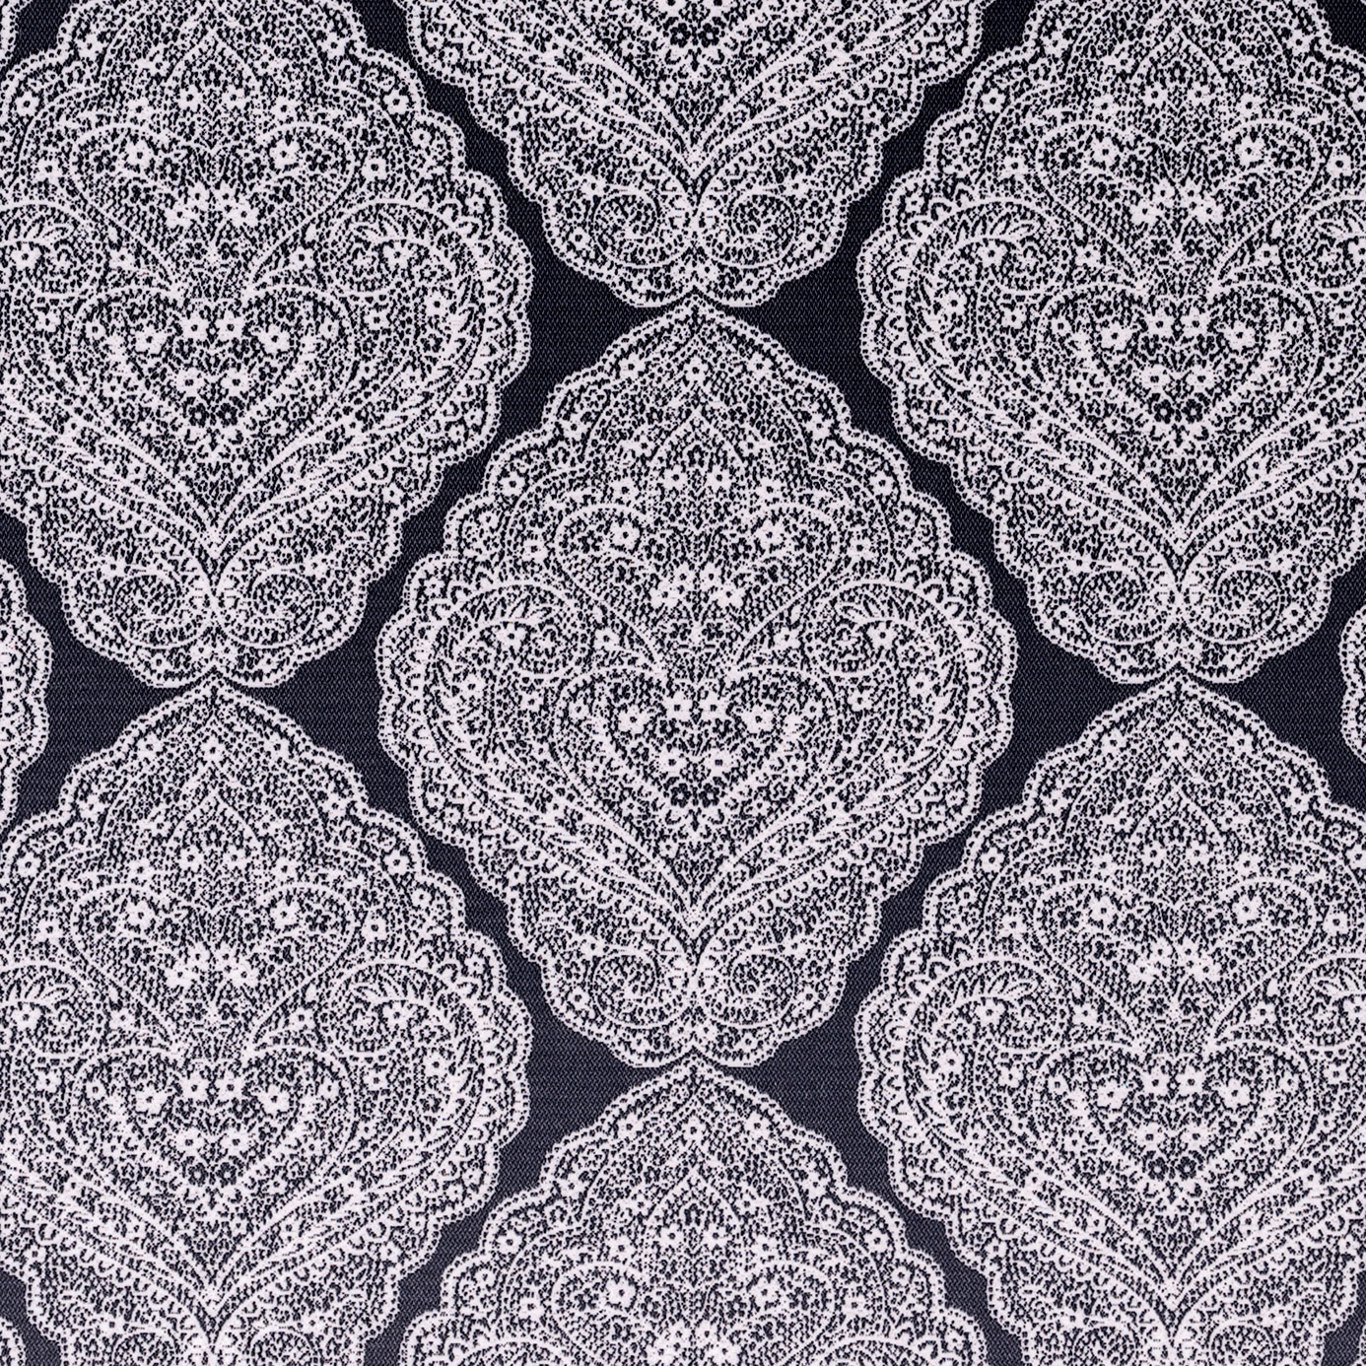 BW1037 Black/White Fabric by CNC